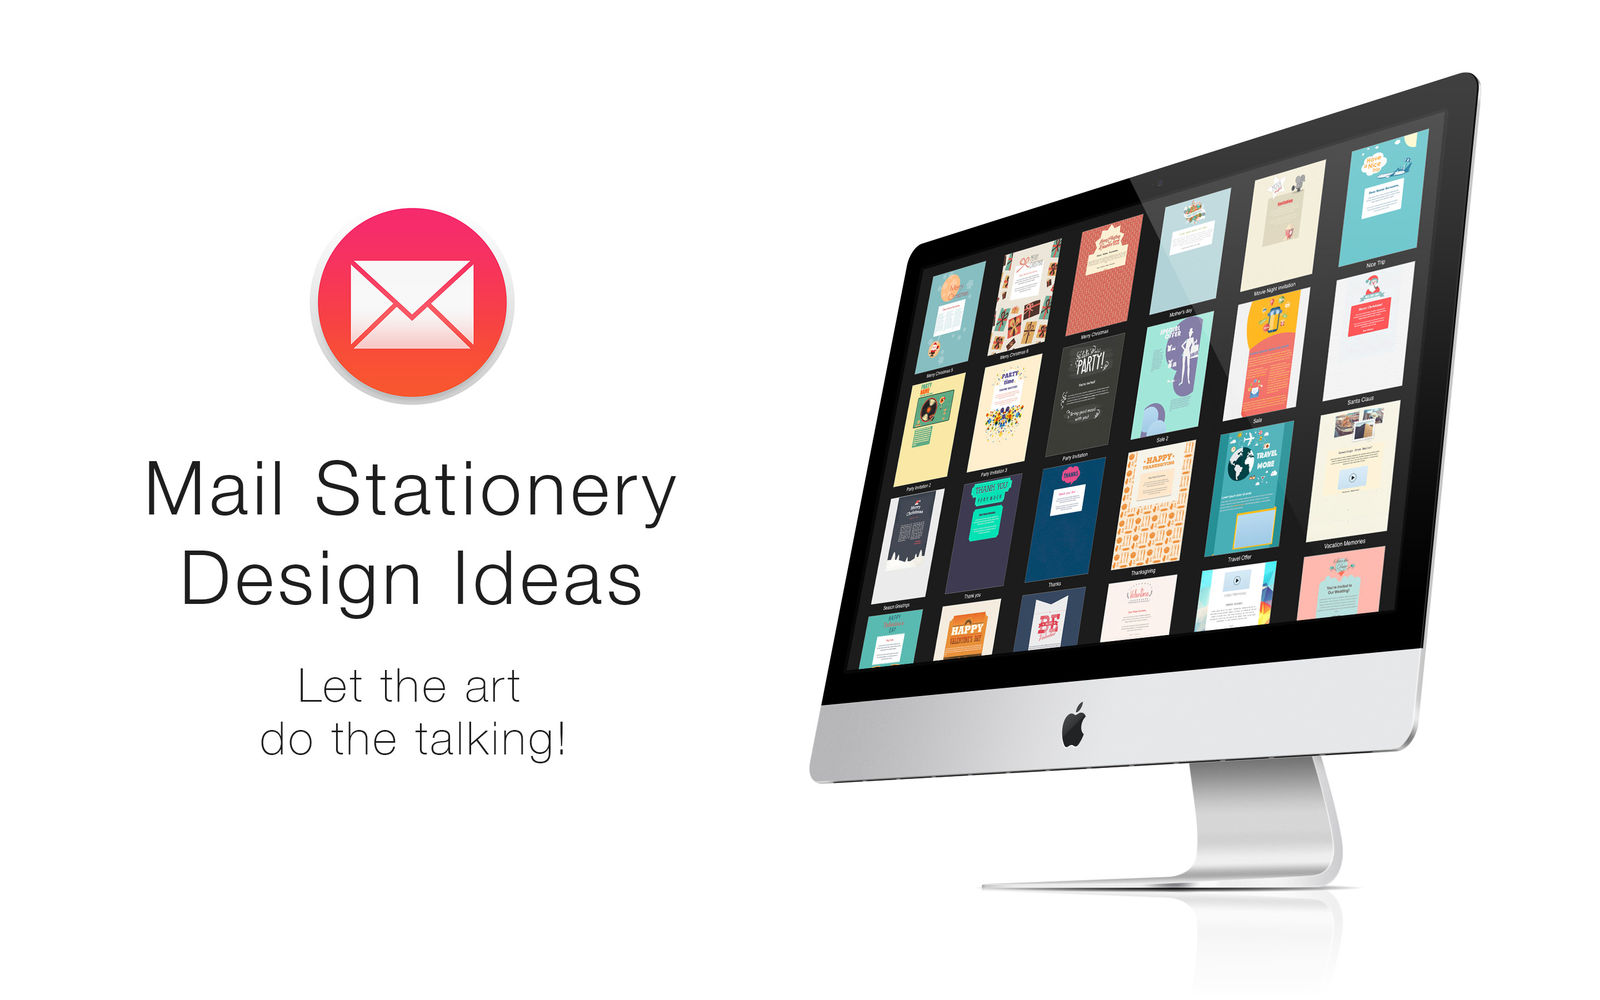 Mail Stationery Design Ideas 1.1 : Main Window